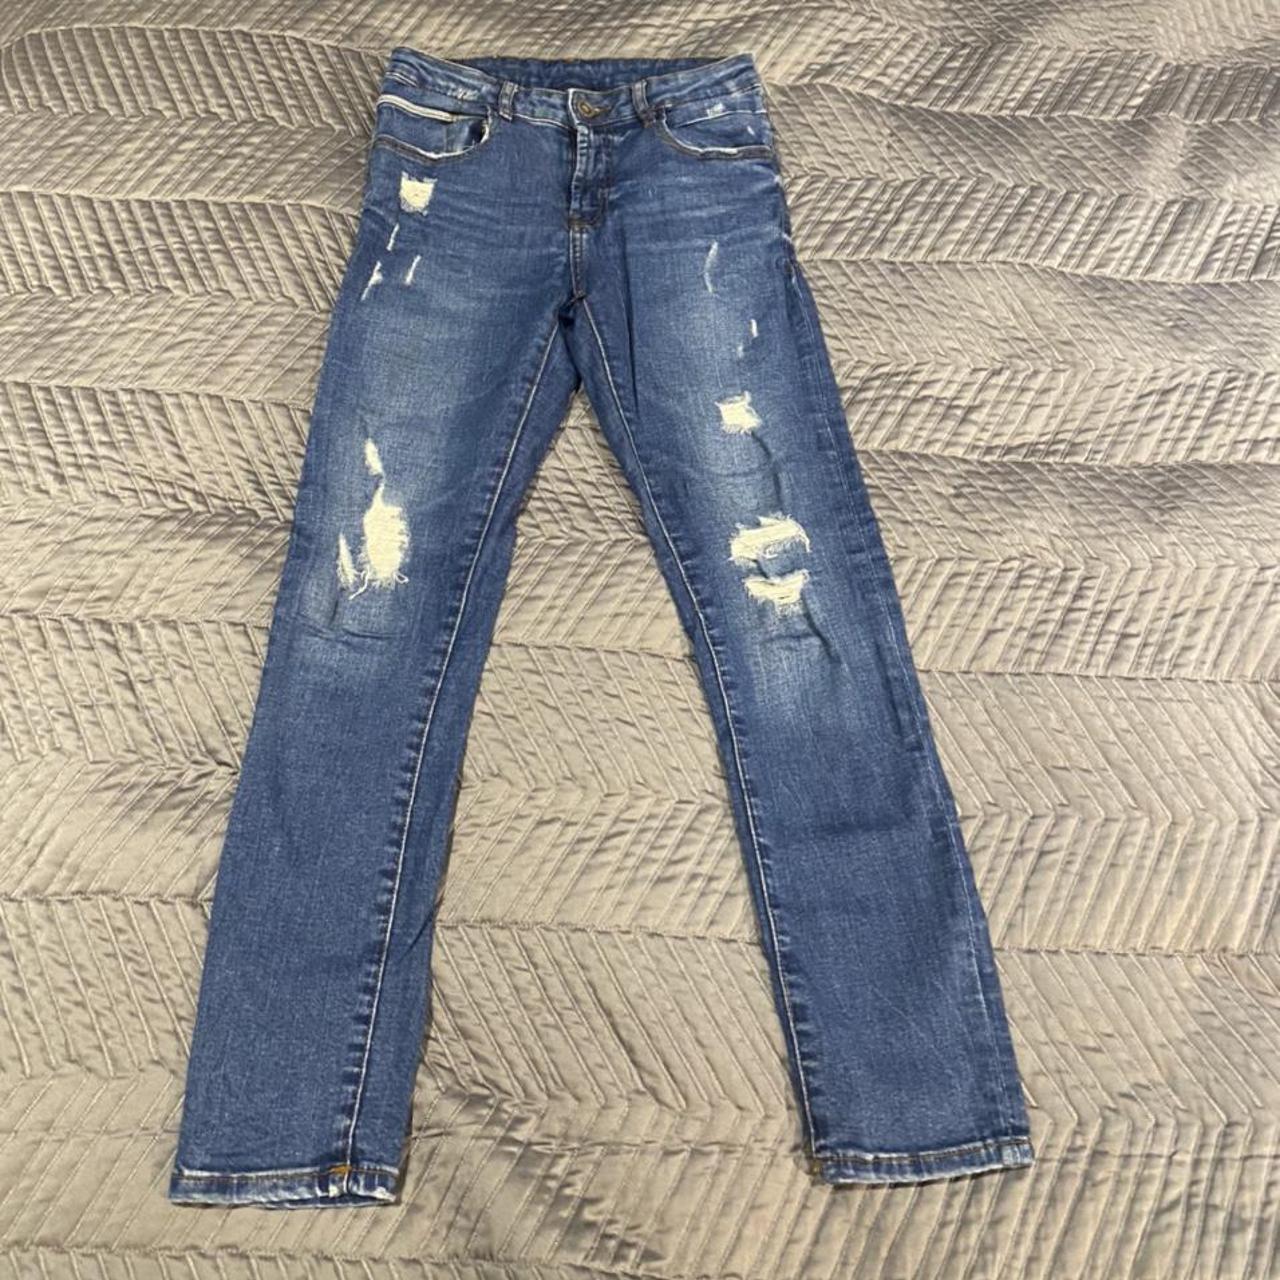 Zara Lower rise ripped jeans size 6 U.K. worn quite... - Depop